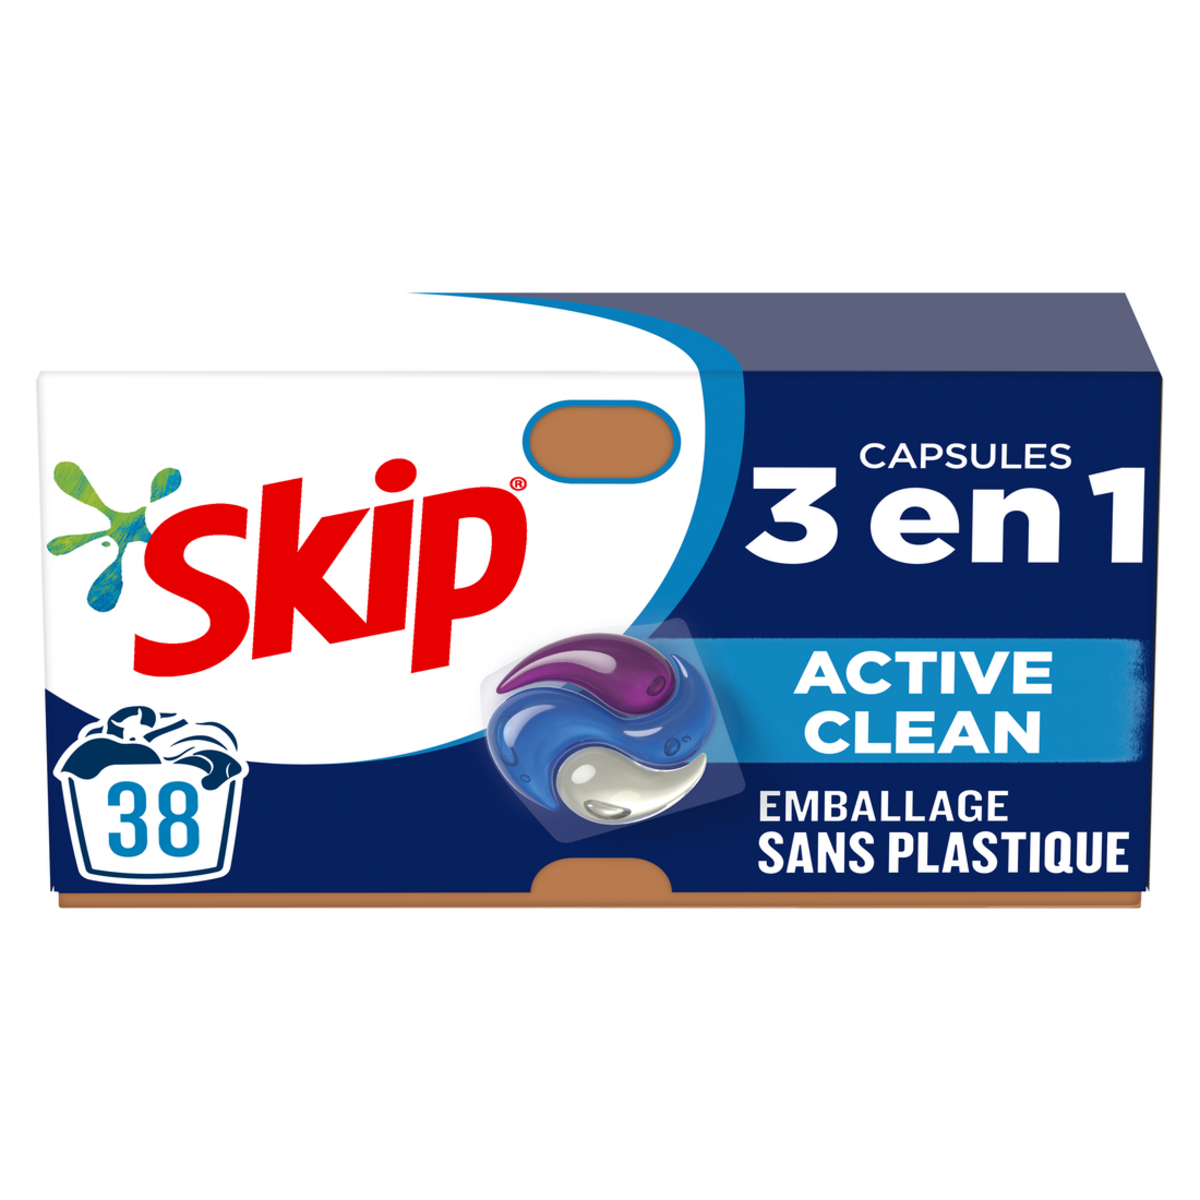 lessive capsule  ultimate active clen 3 en 1 Skip